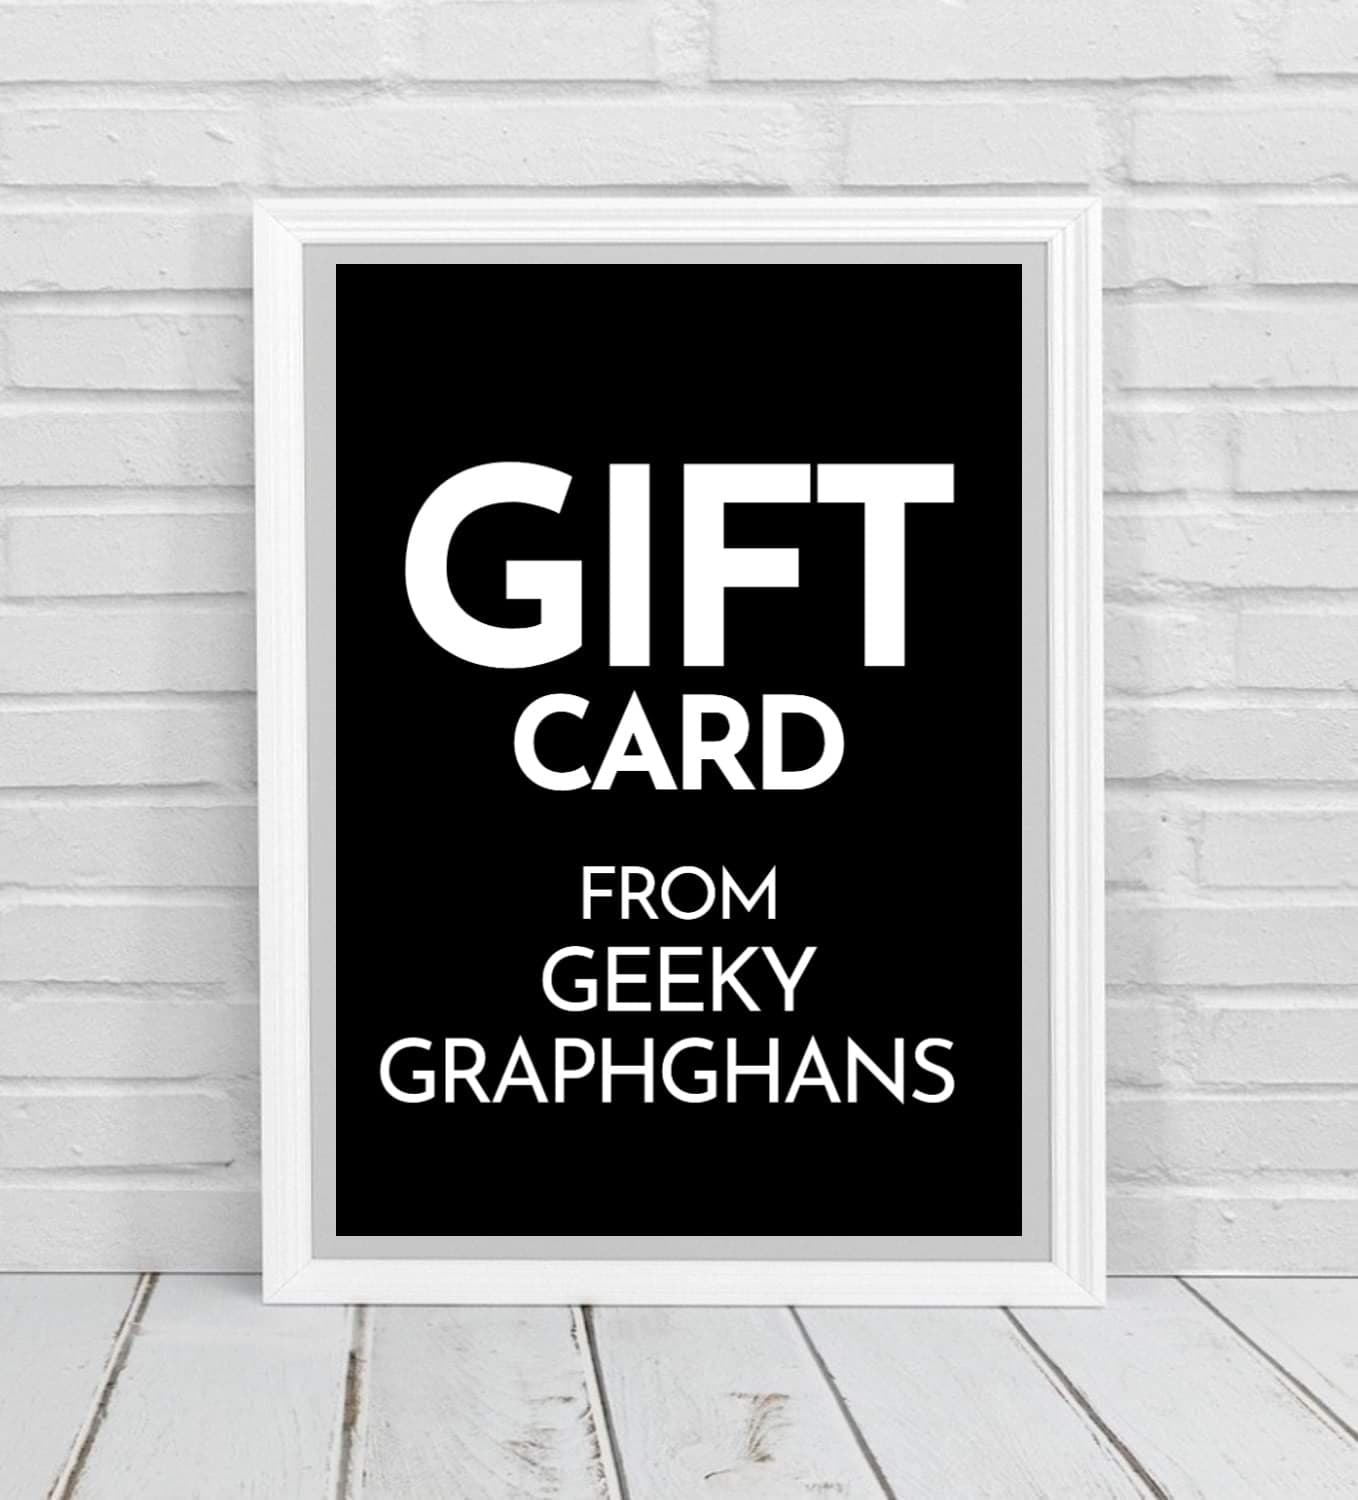 Geeky Graphghans eGift Card